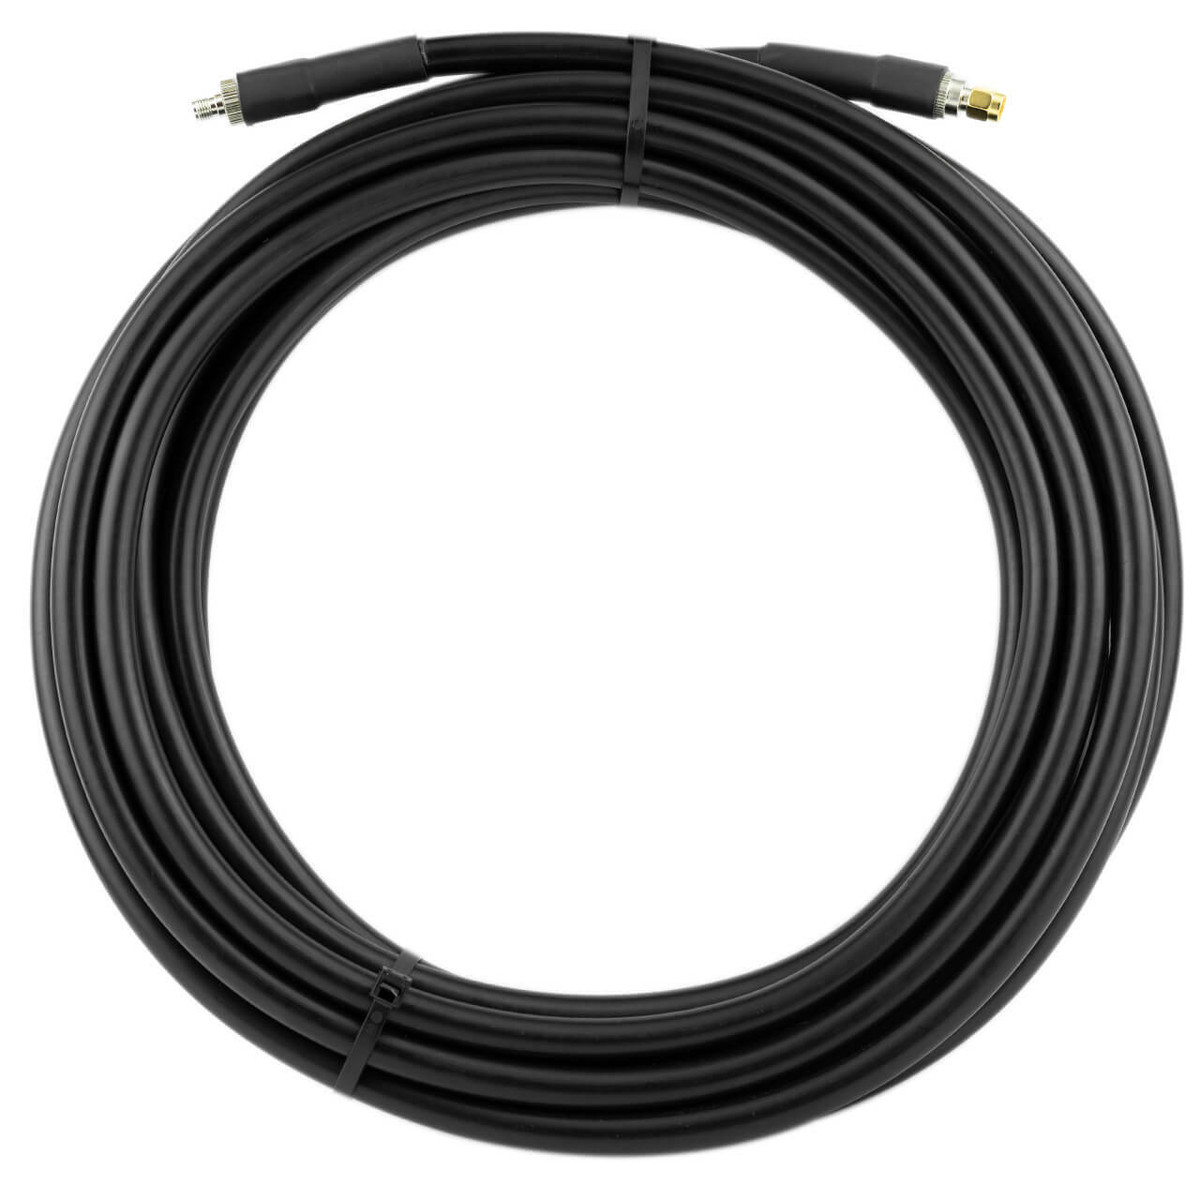 Bolton Technical SMA-Male to SMA-Female Bolton400 Ultra Low-Loss Coax Cable | 30 ft. Cable